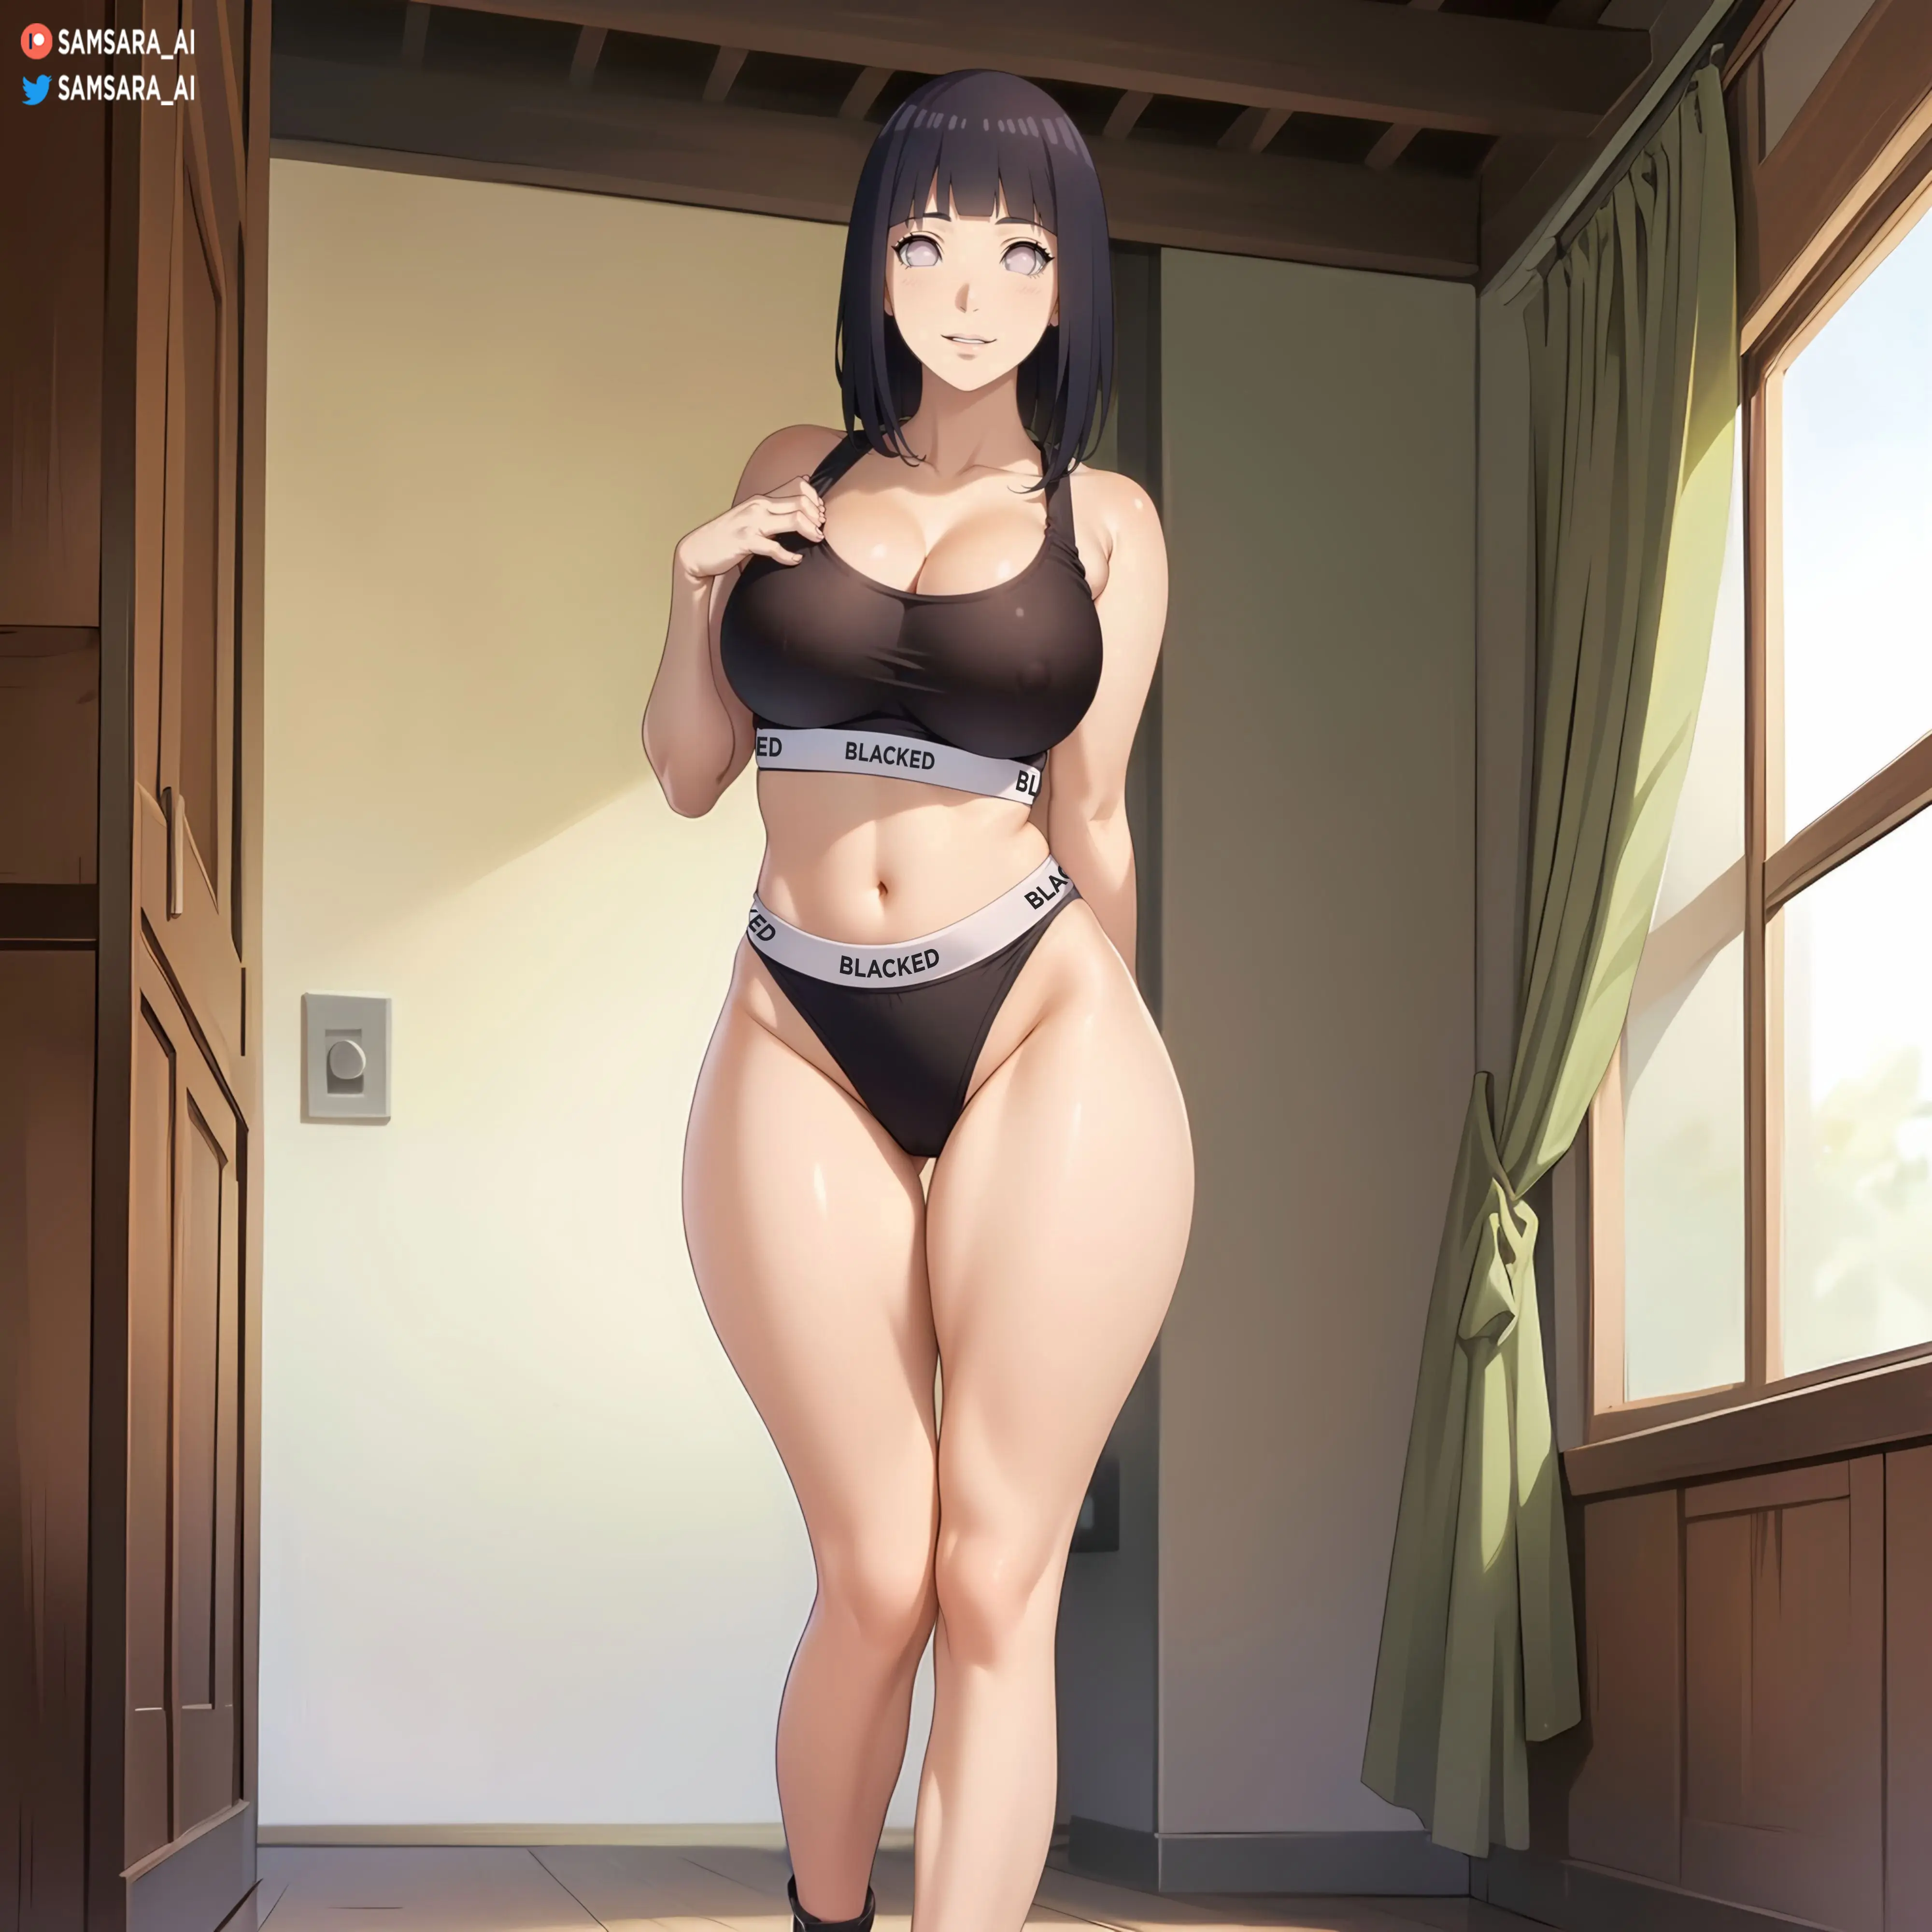 Hyuga Hinata in blacked bra and panties - Rule 34 AI Art